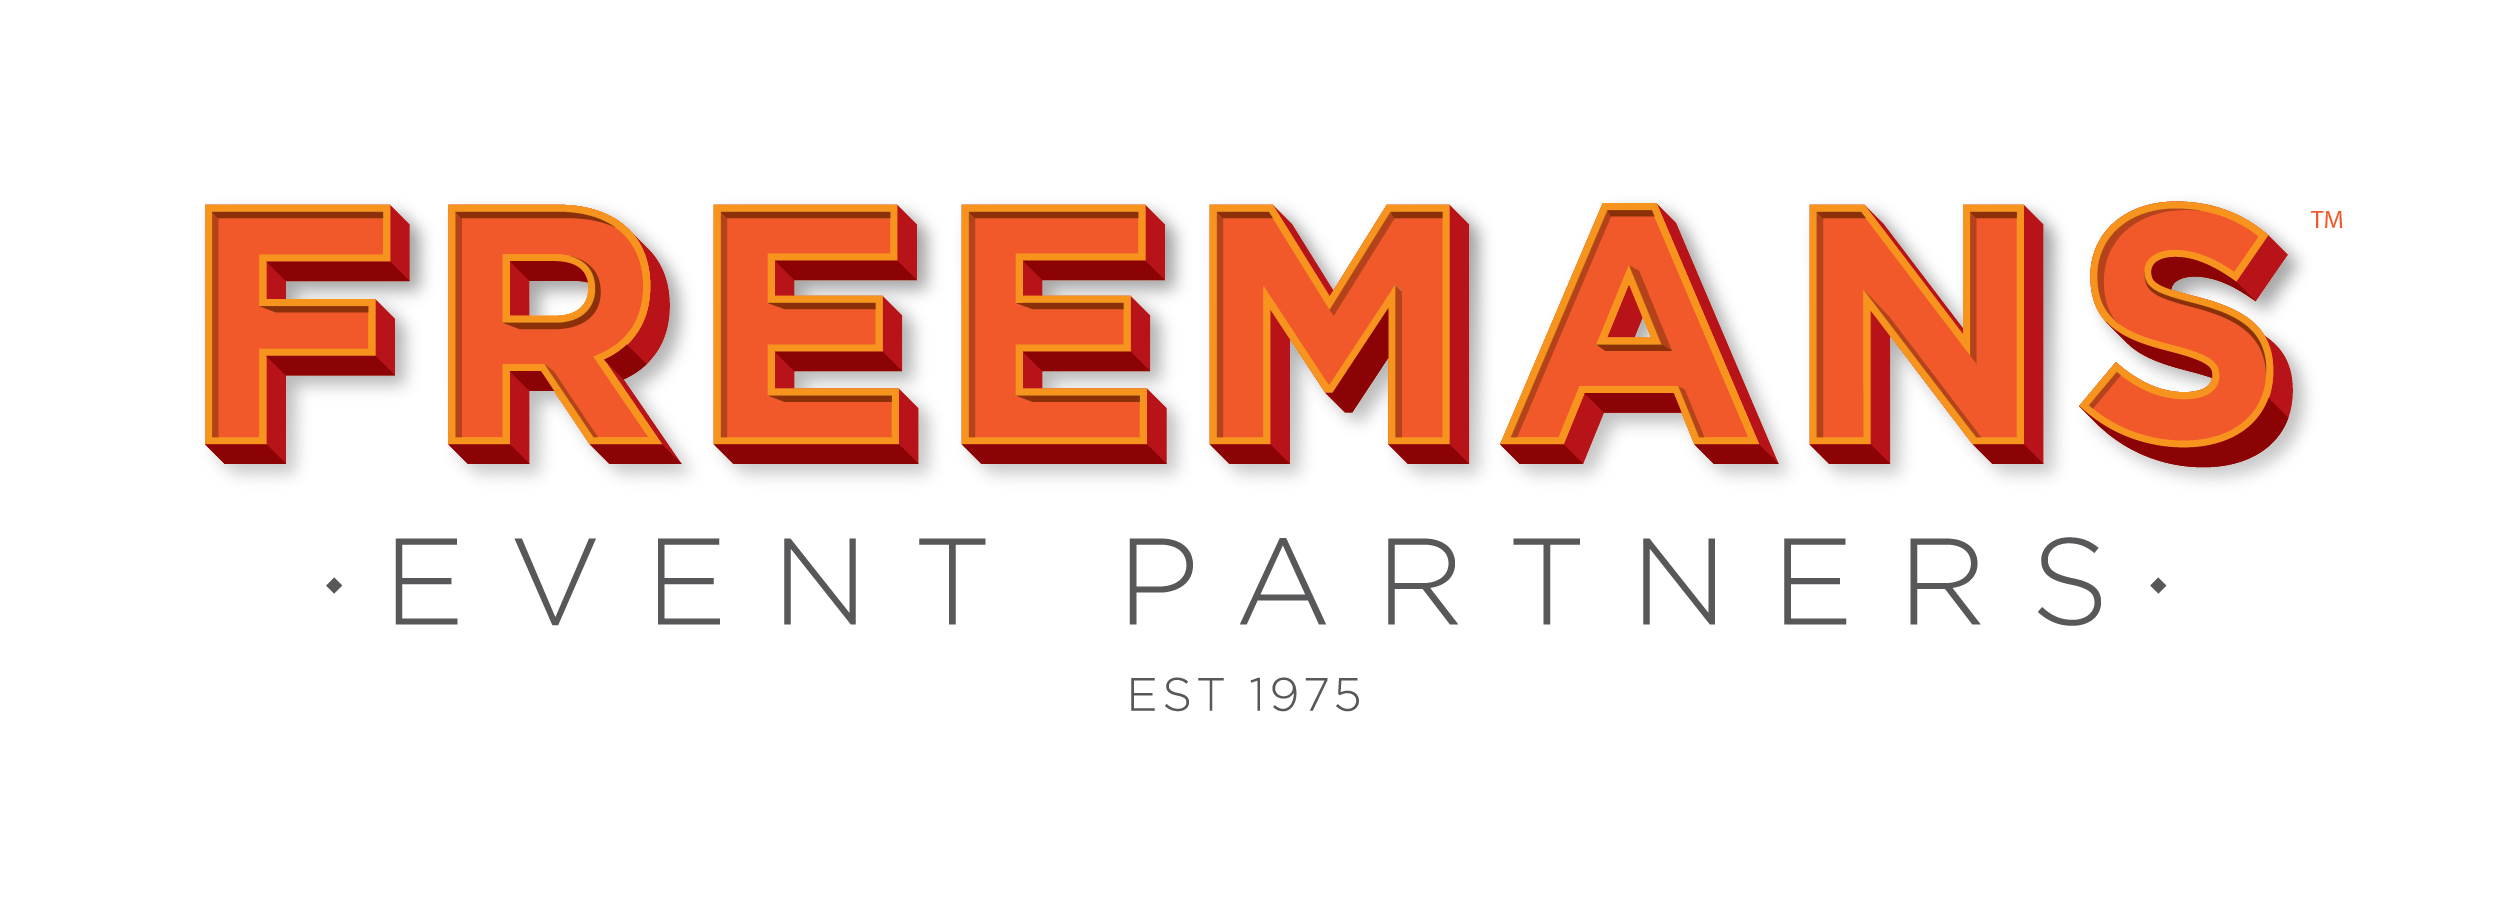 Freemans Event Partners